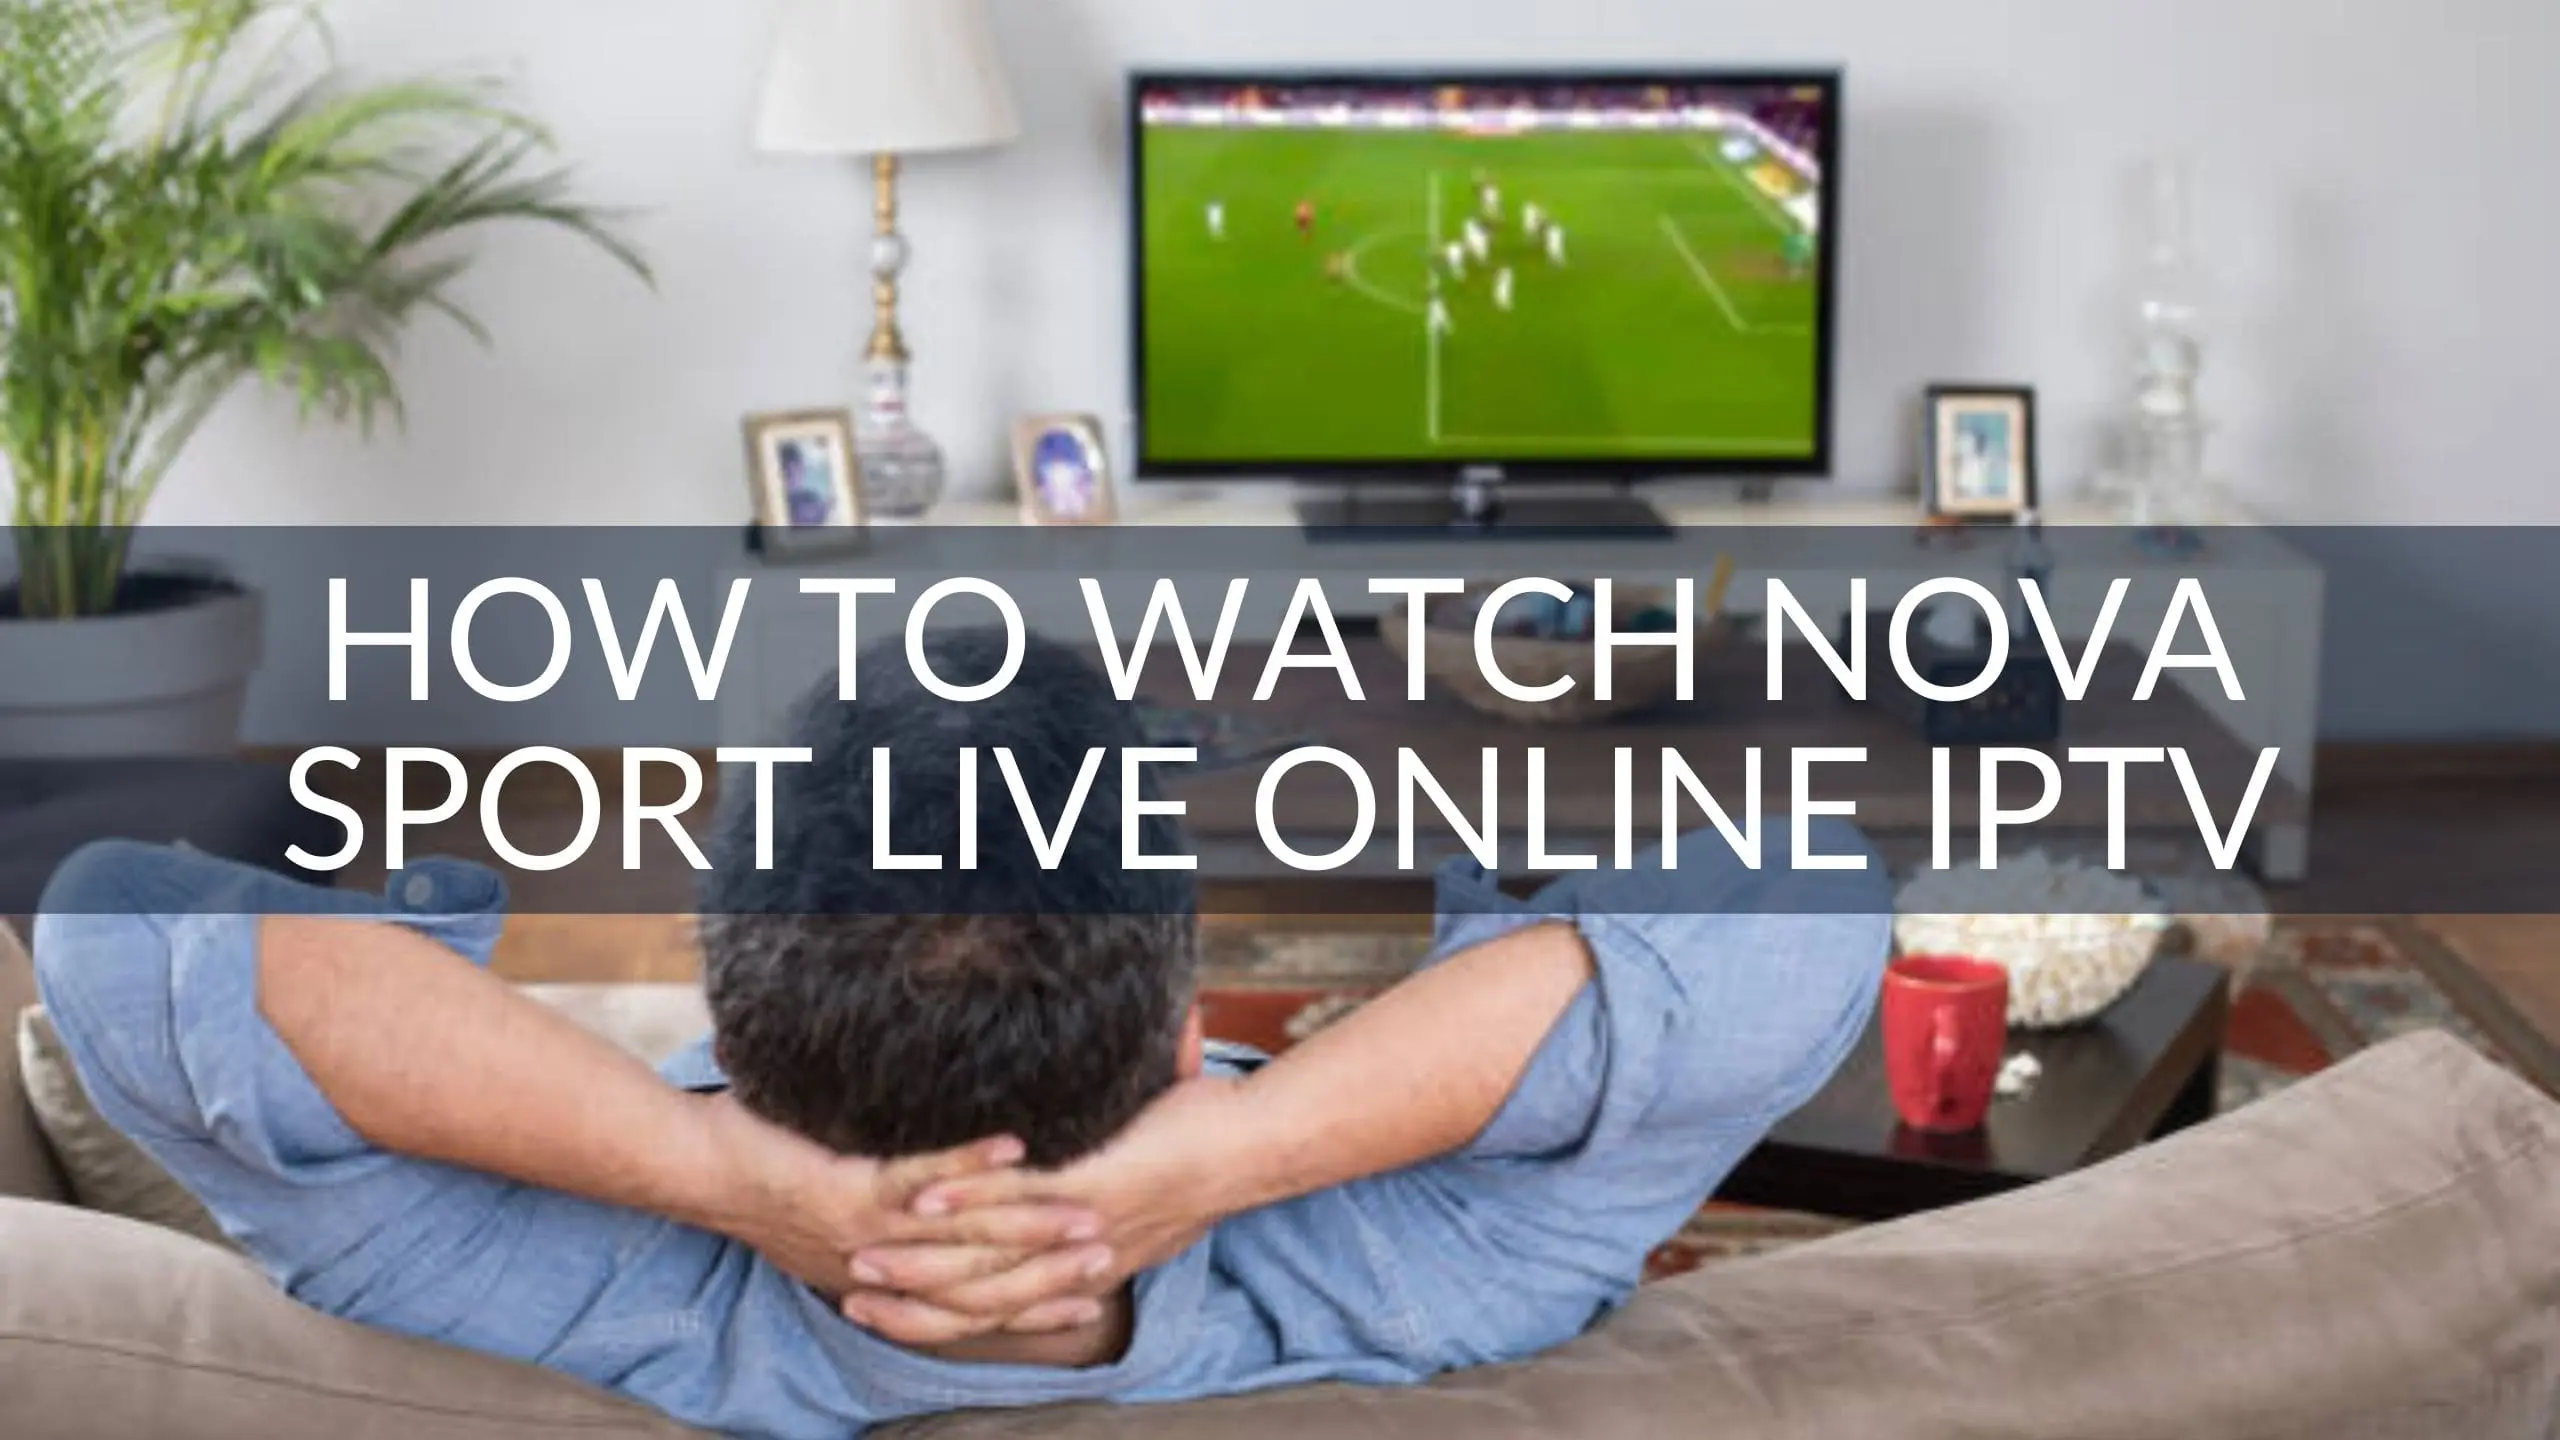 How to Watch Nova Sport Live Online with IPTV